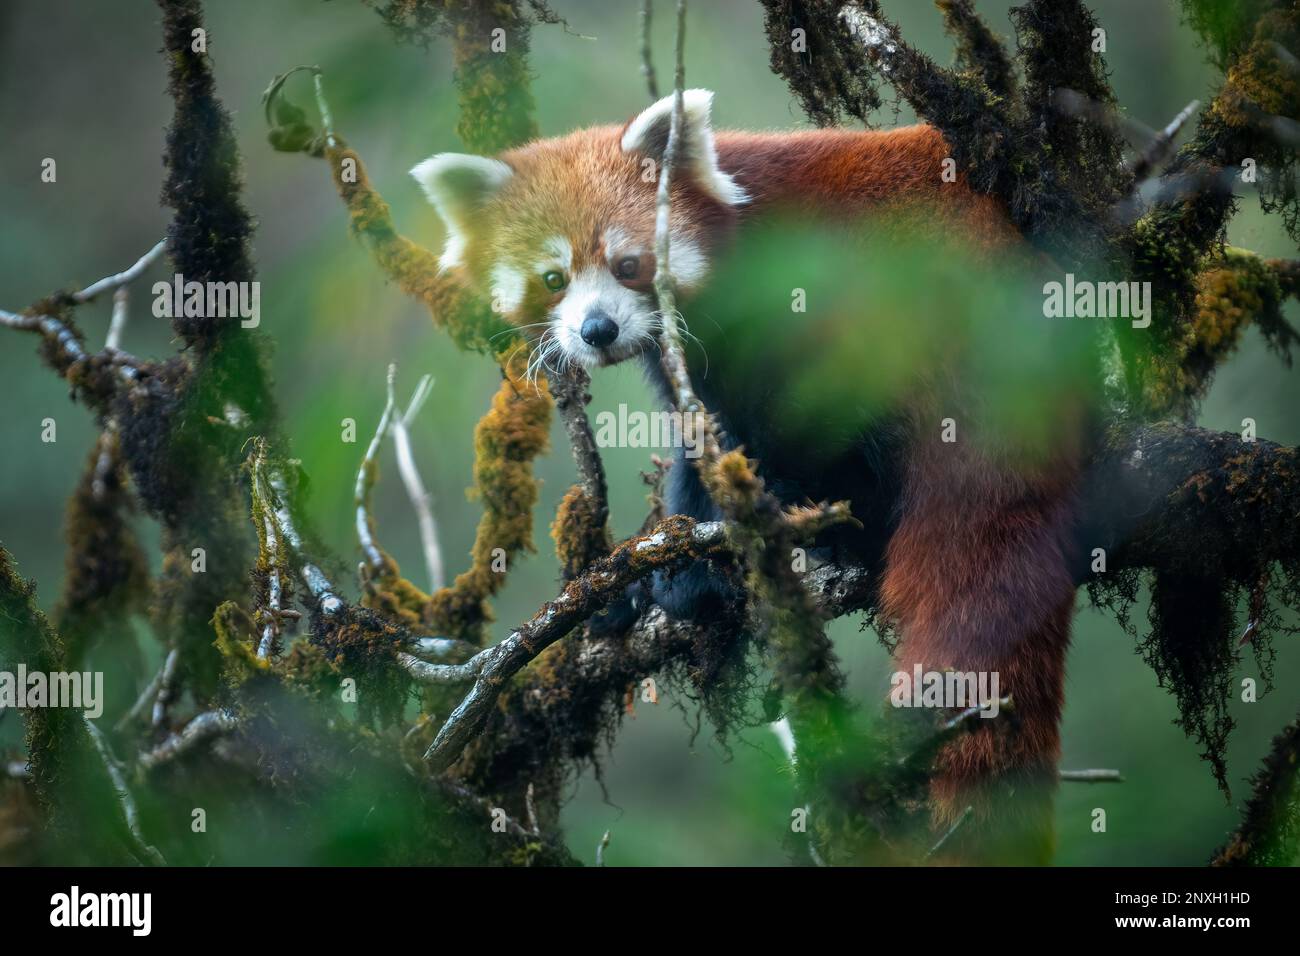 Immagine teleobiettivo media di una femmina di panda rossa seduta in un albero di noce di quercia mossy Foto Stock